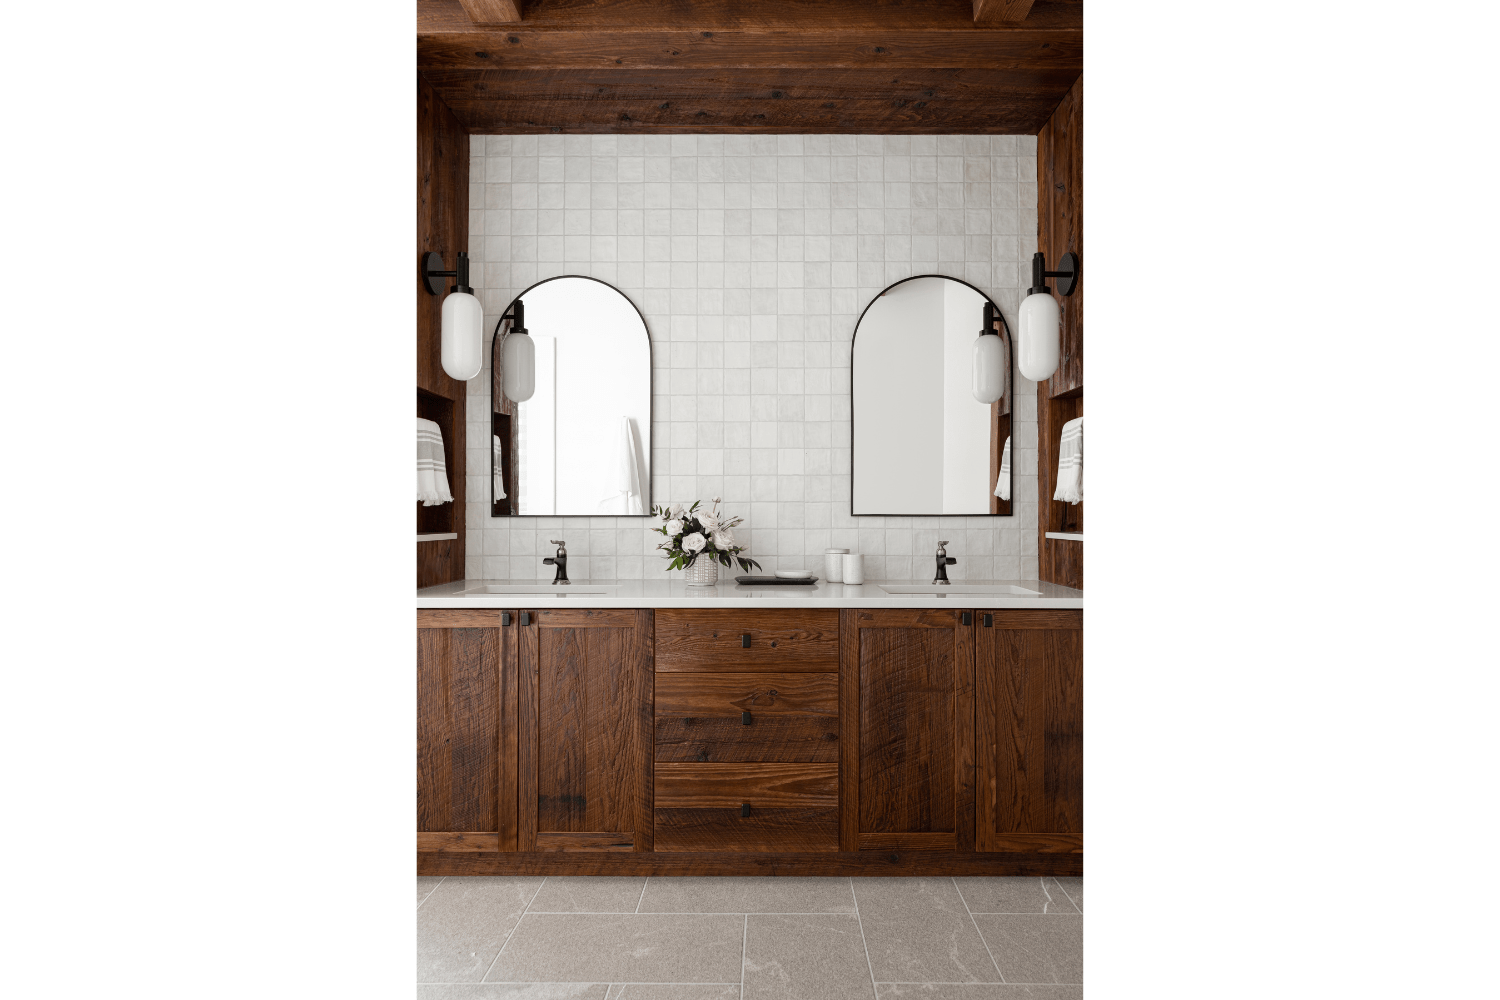 Project Morrison Lake:  Rustic Master Bathroom Vanity 